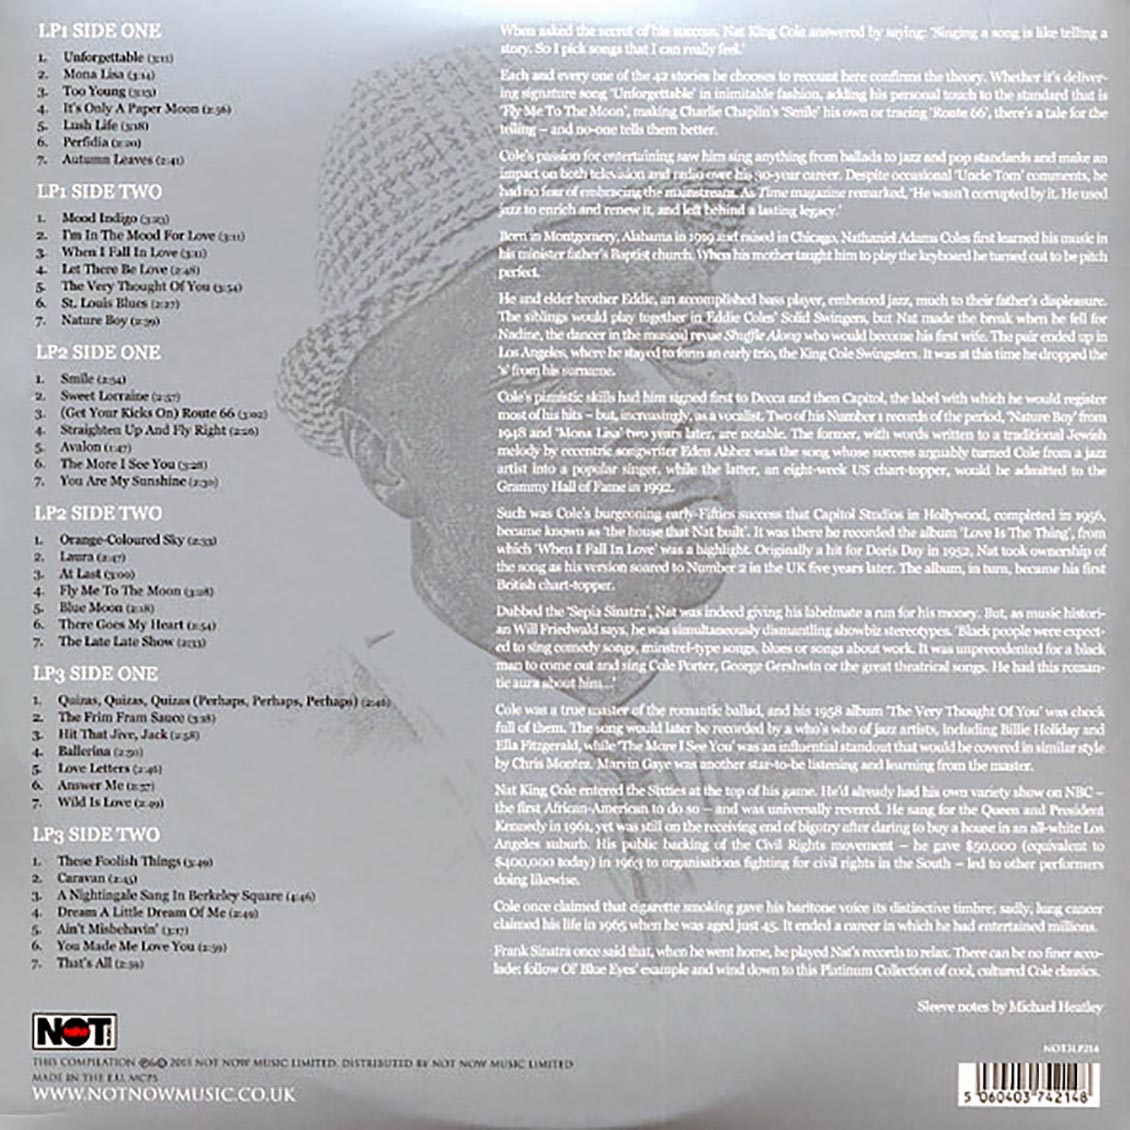 Nat King Cole - The Platinum Collection [2017 Compilation Color] [New Triple Vinyl Record LP]